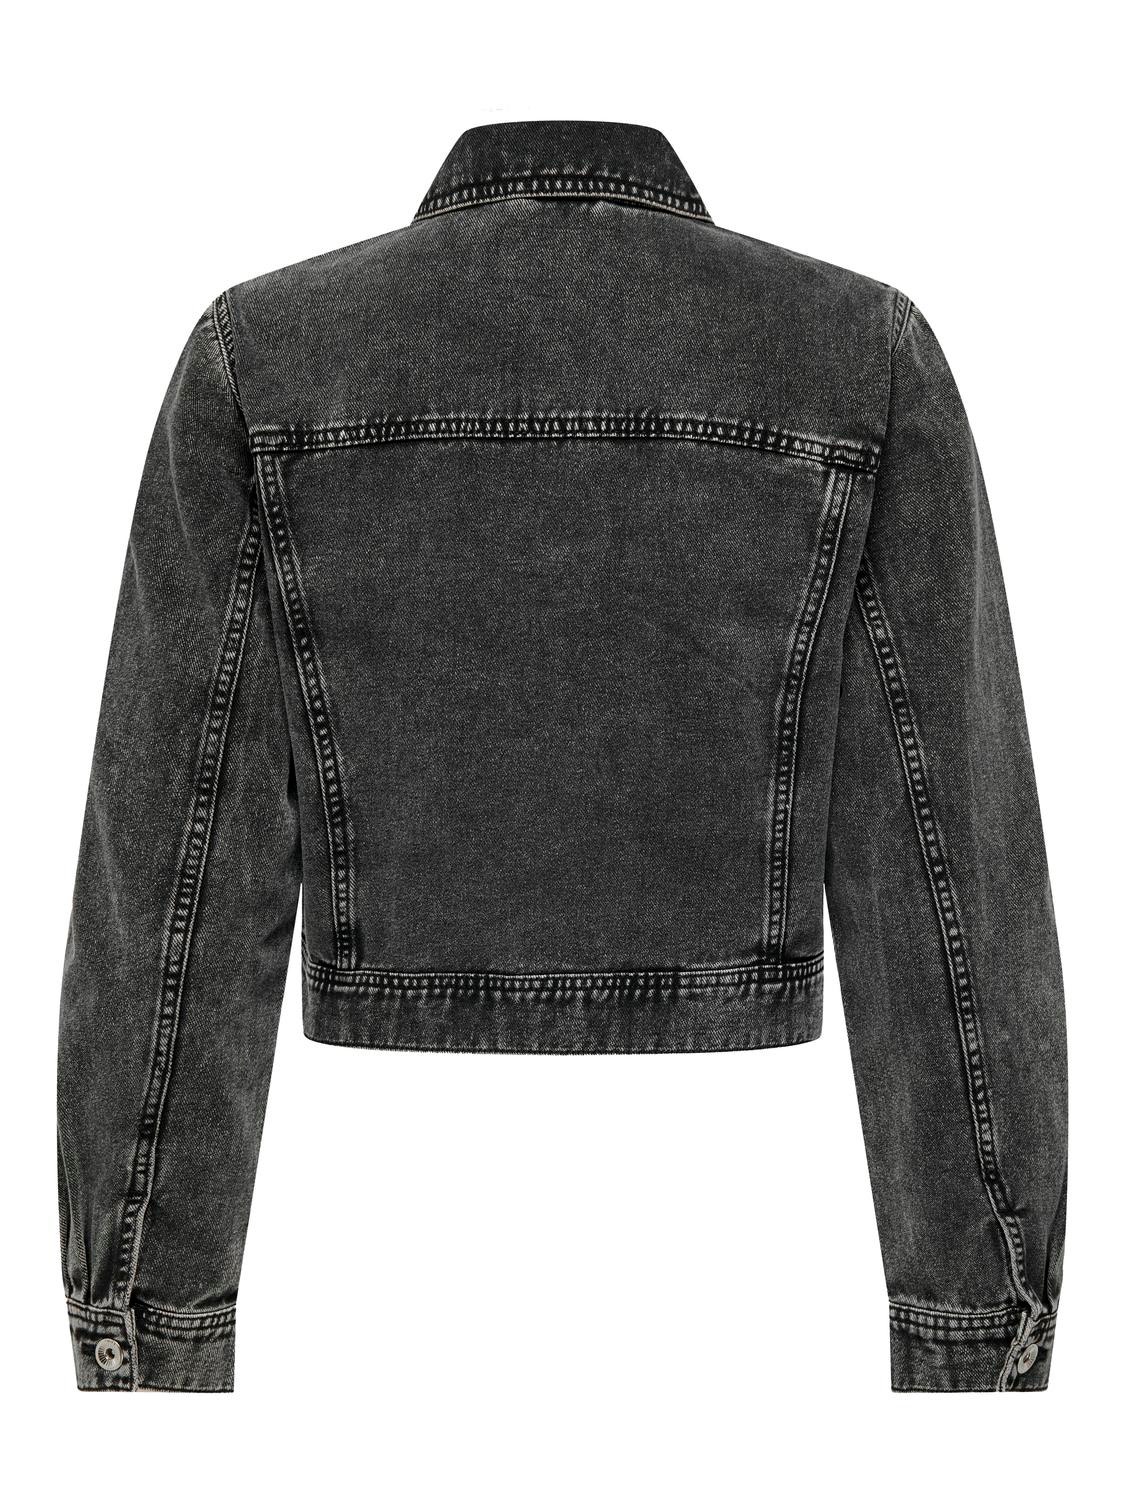 ONLY Spread collar Jacket -Black - 15317306